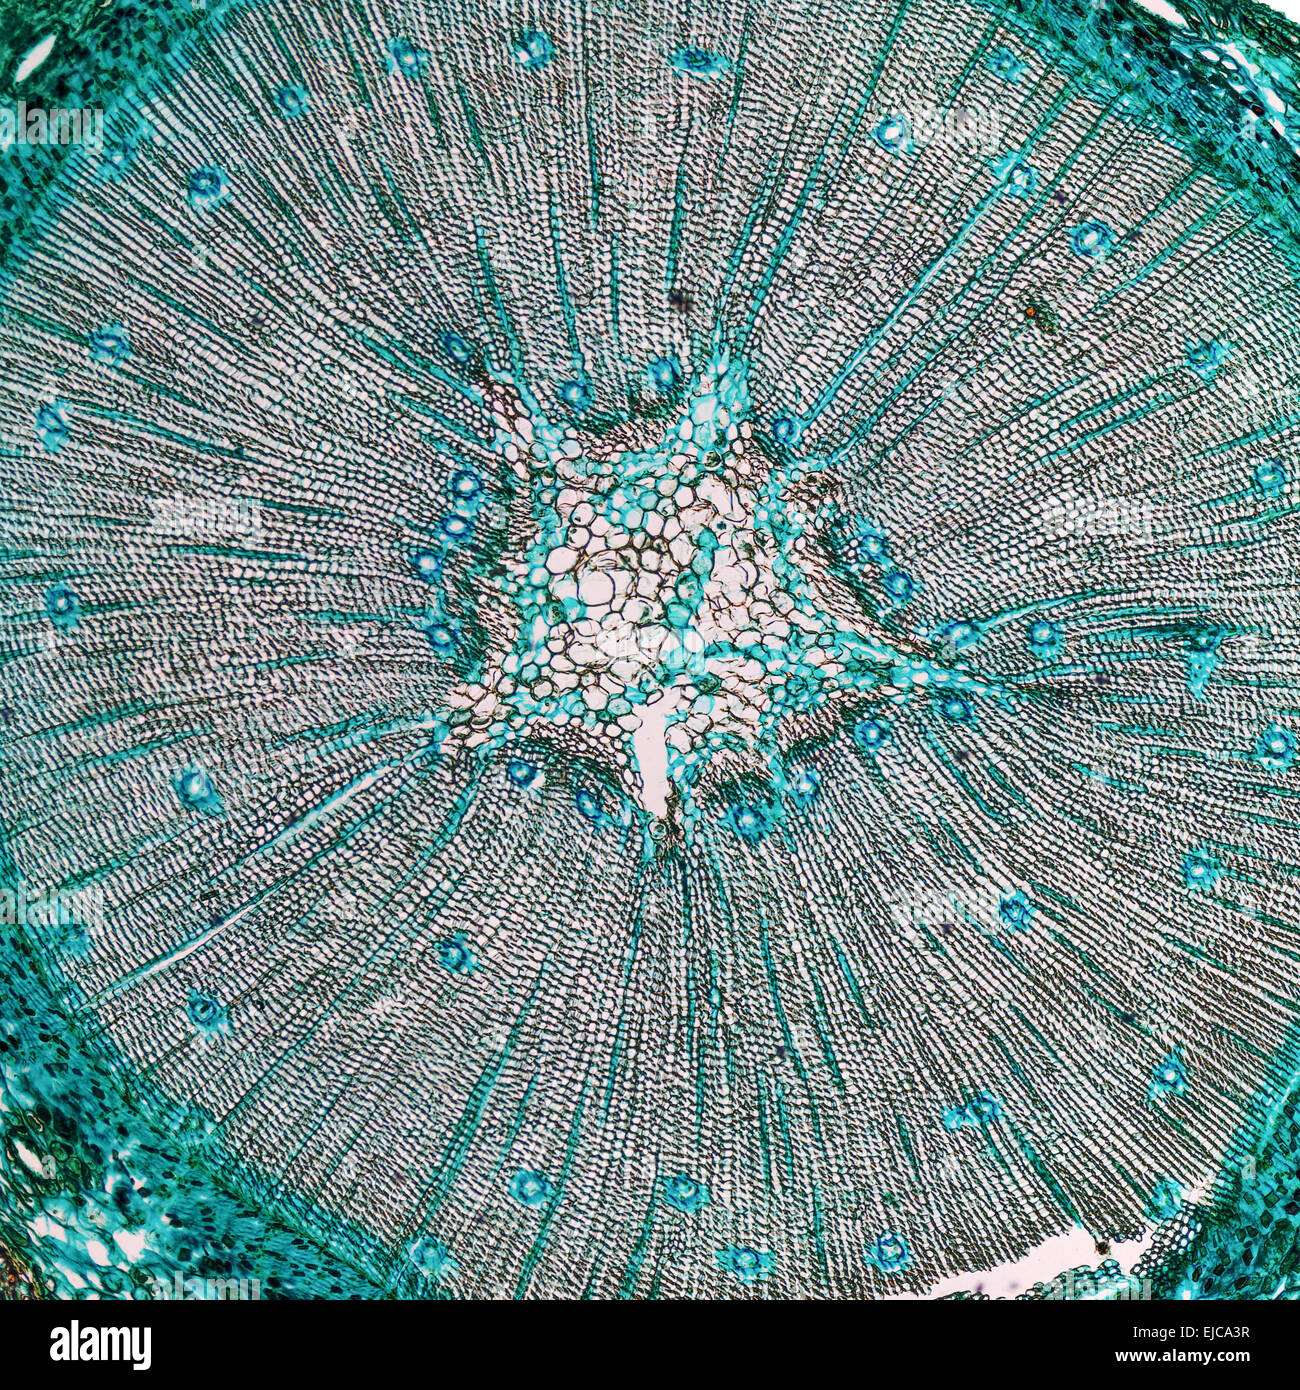 Pine Wood micrograph Stock Photo